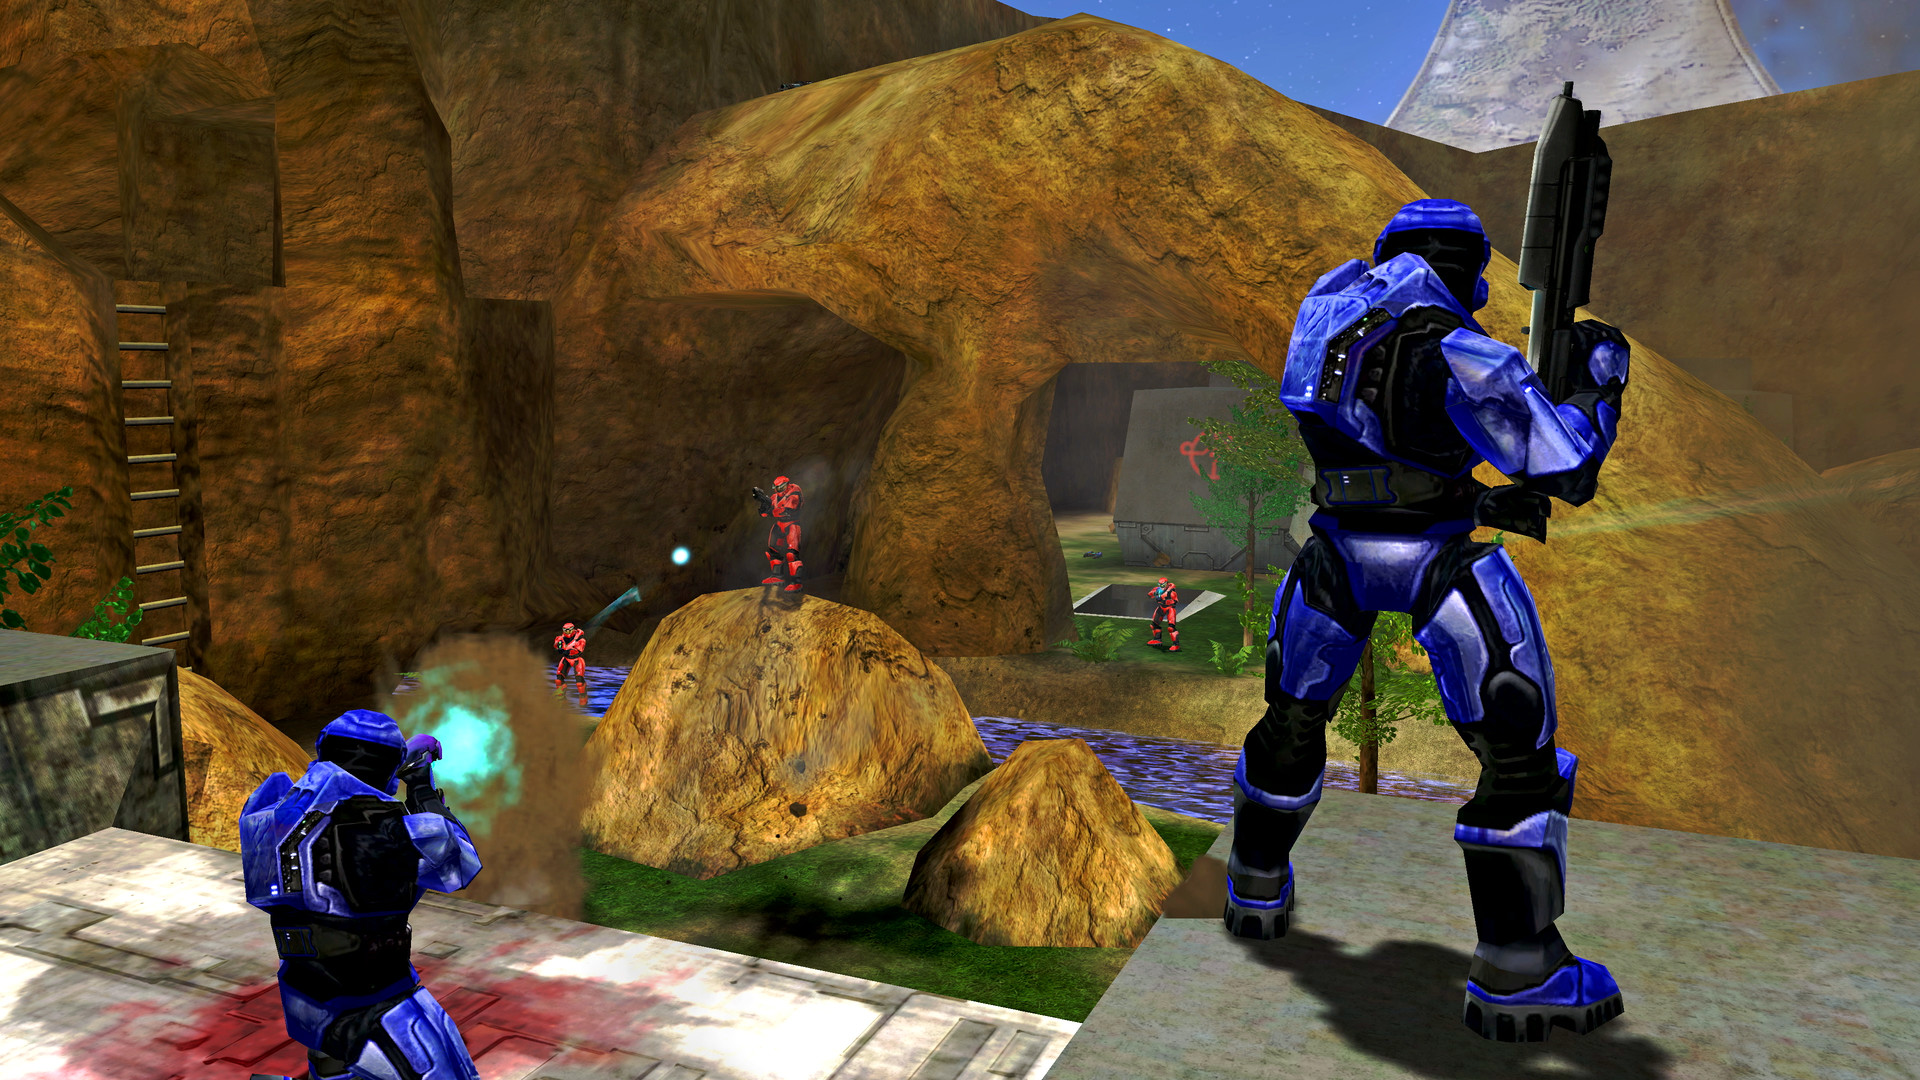 Halo: Combat Evolved Anniversary on Steam